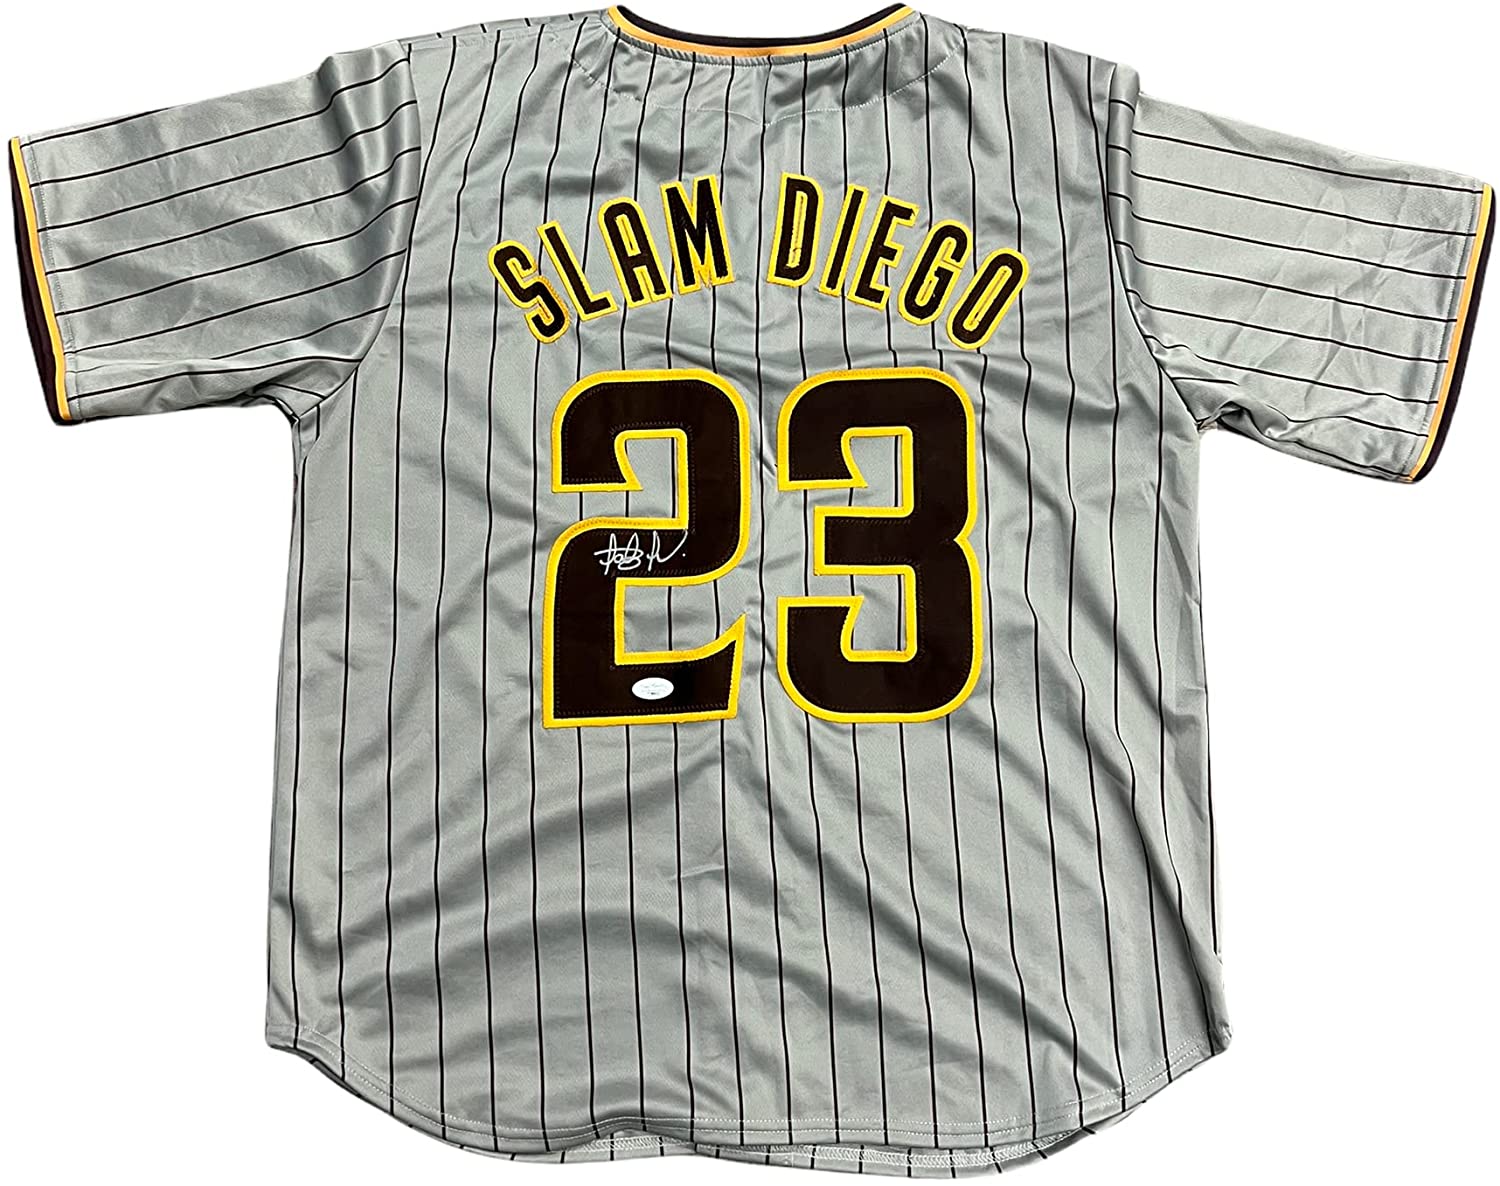 Fernando Tatis Jr Autographed San Diego Padres Brown Nike Baseball Jersey -  JSA COA